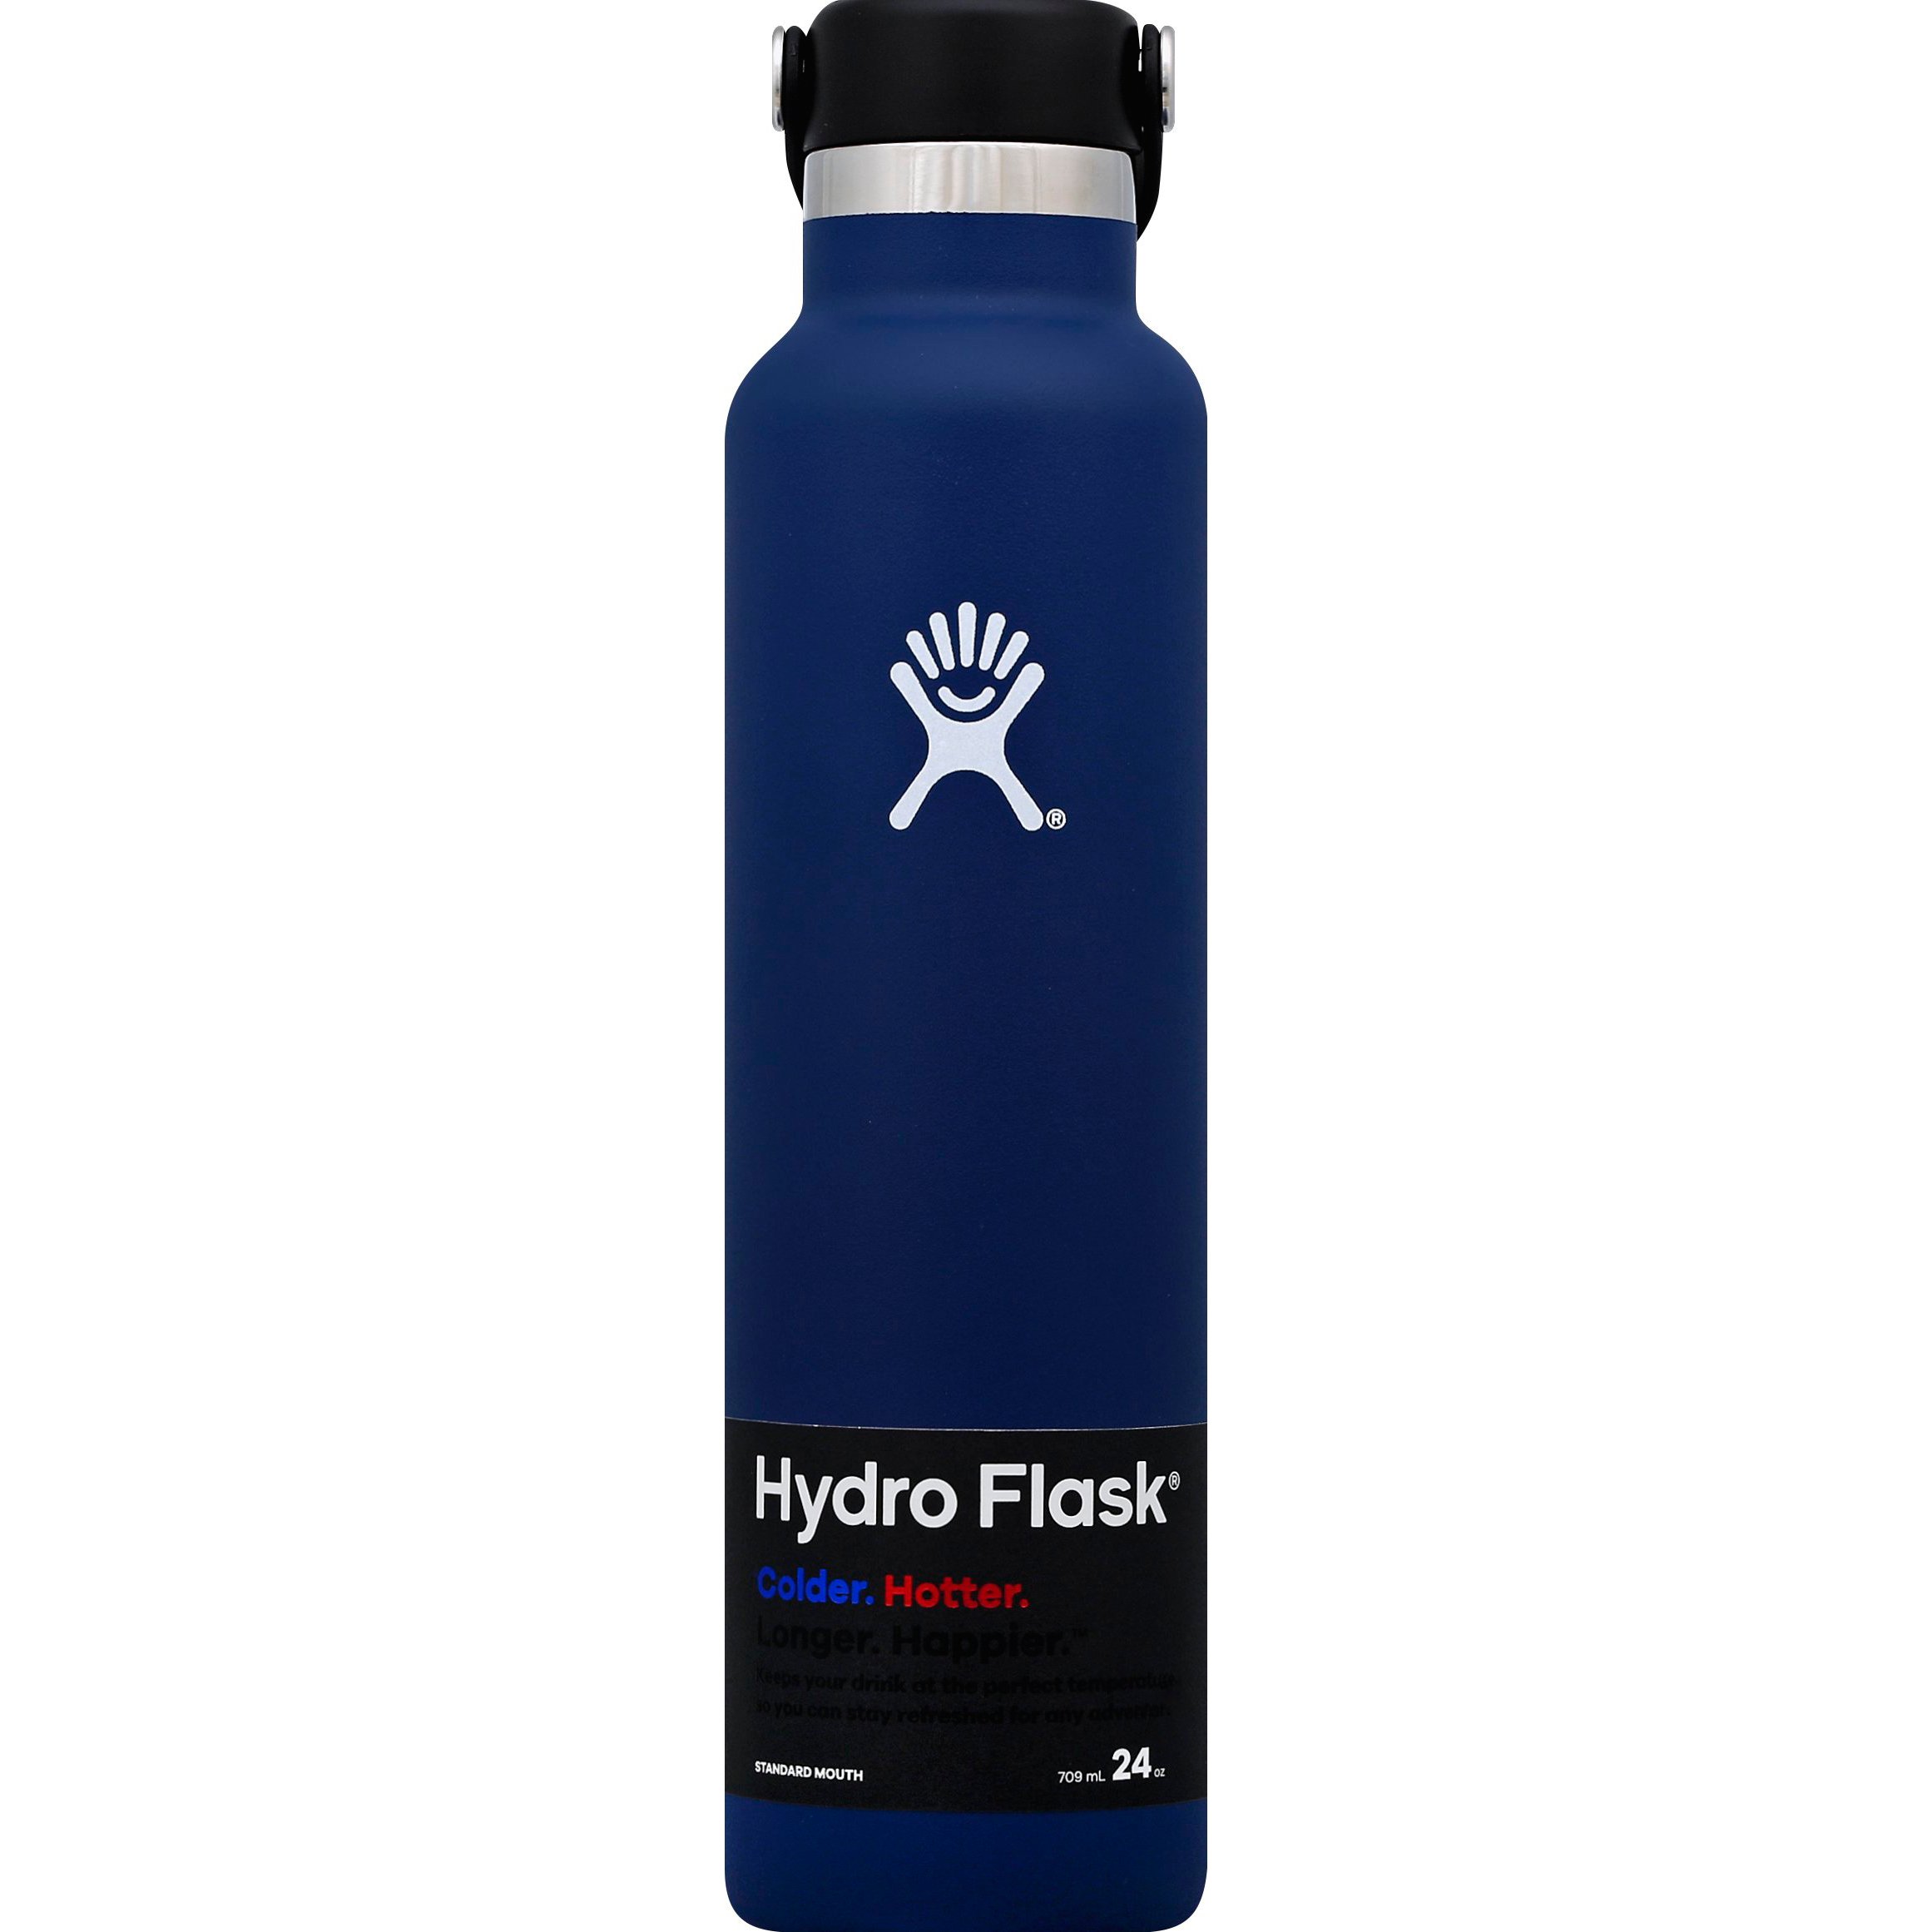 Hydro Flask Food Flask, Plum - Shop Food Storage at H-E-B